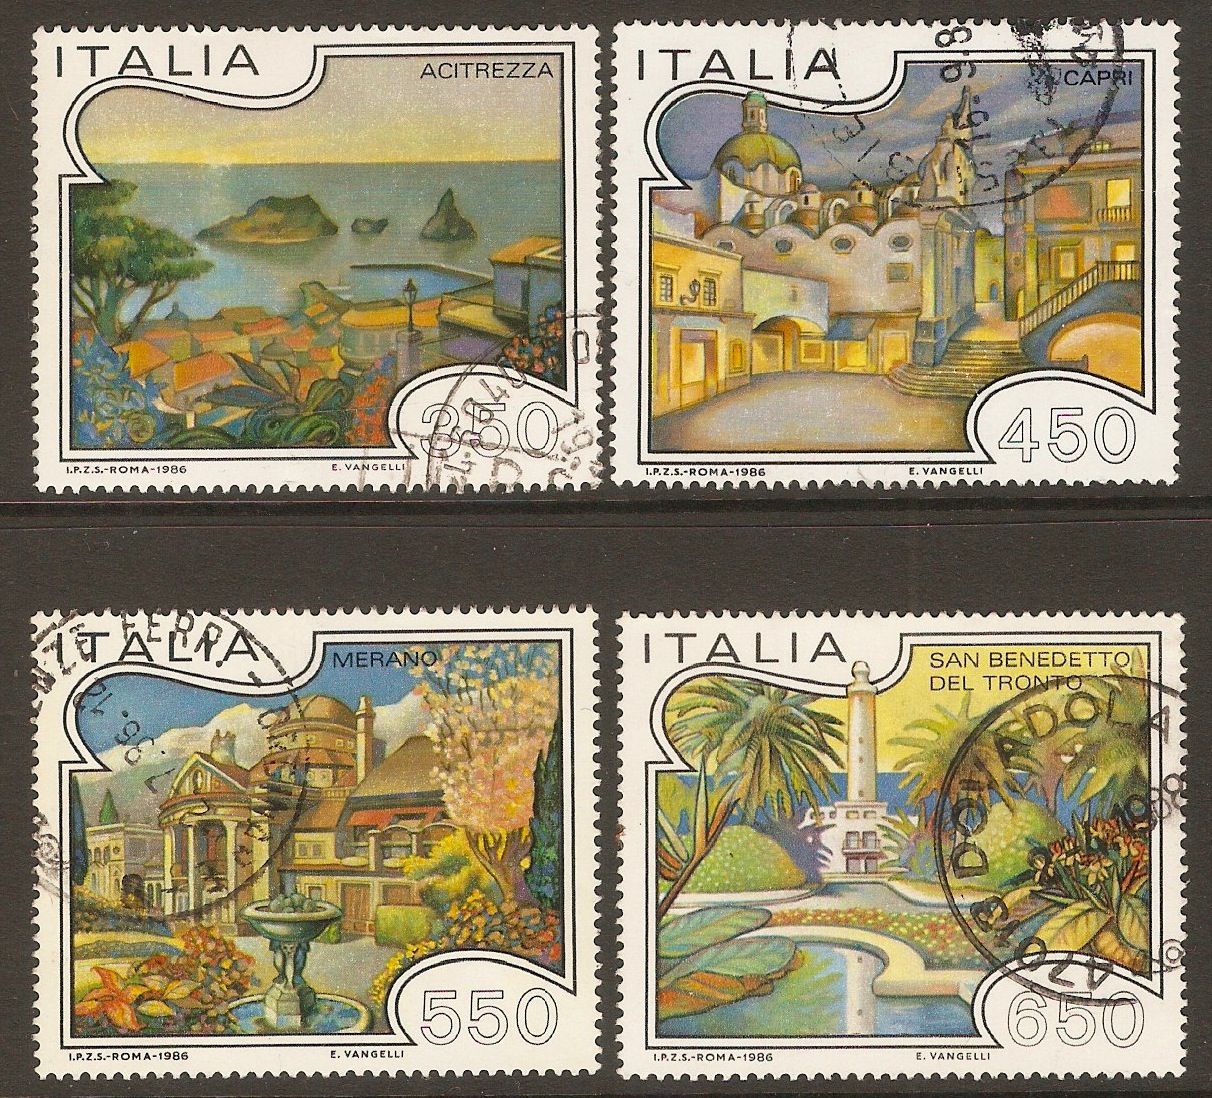 Italy 1986 Tourist Publicity set (13th. Series). SG1917-SG1920.